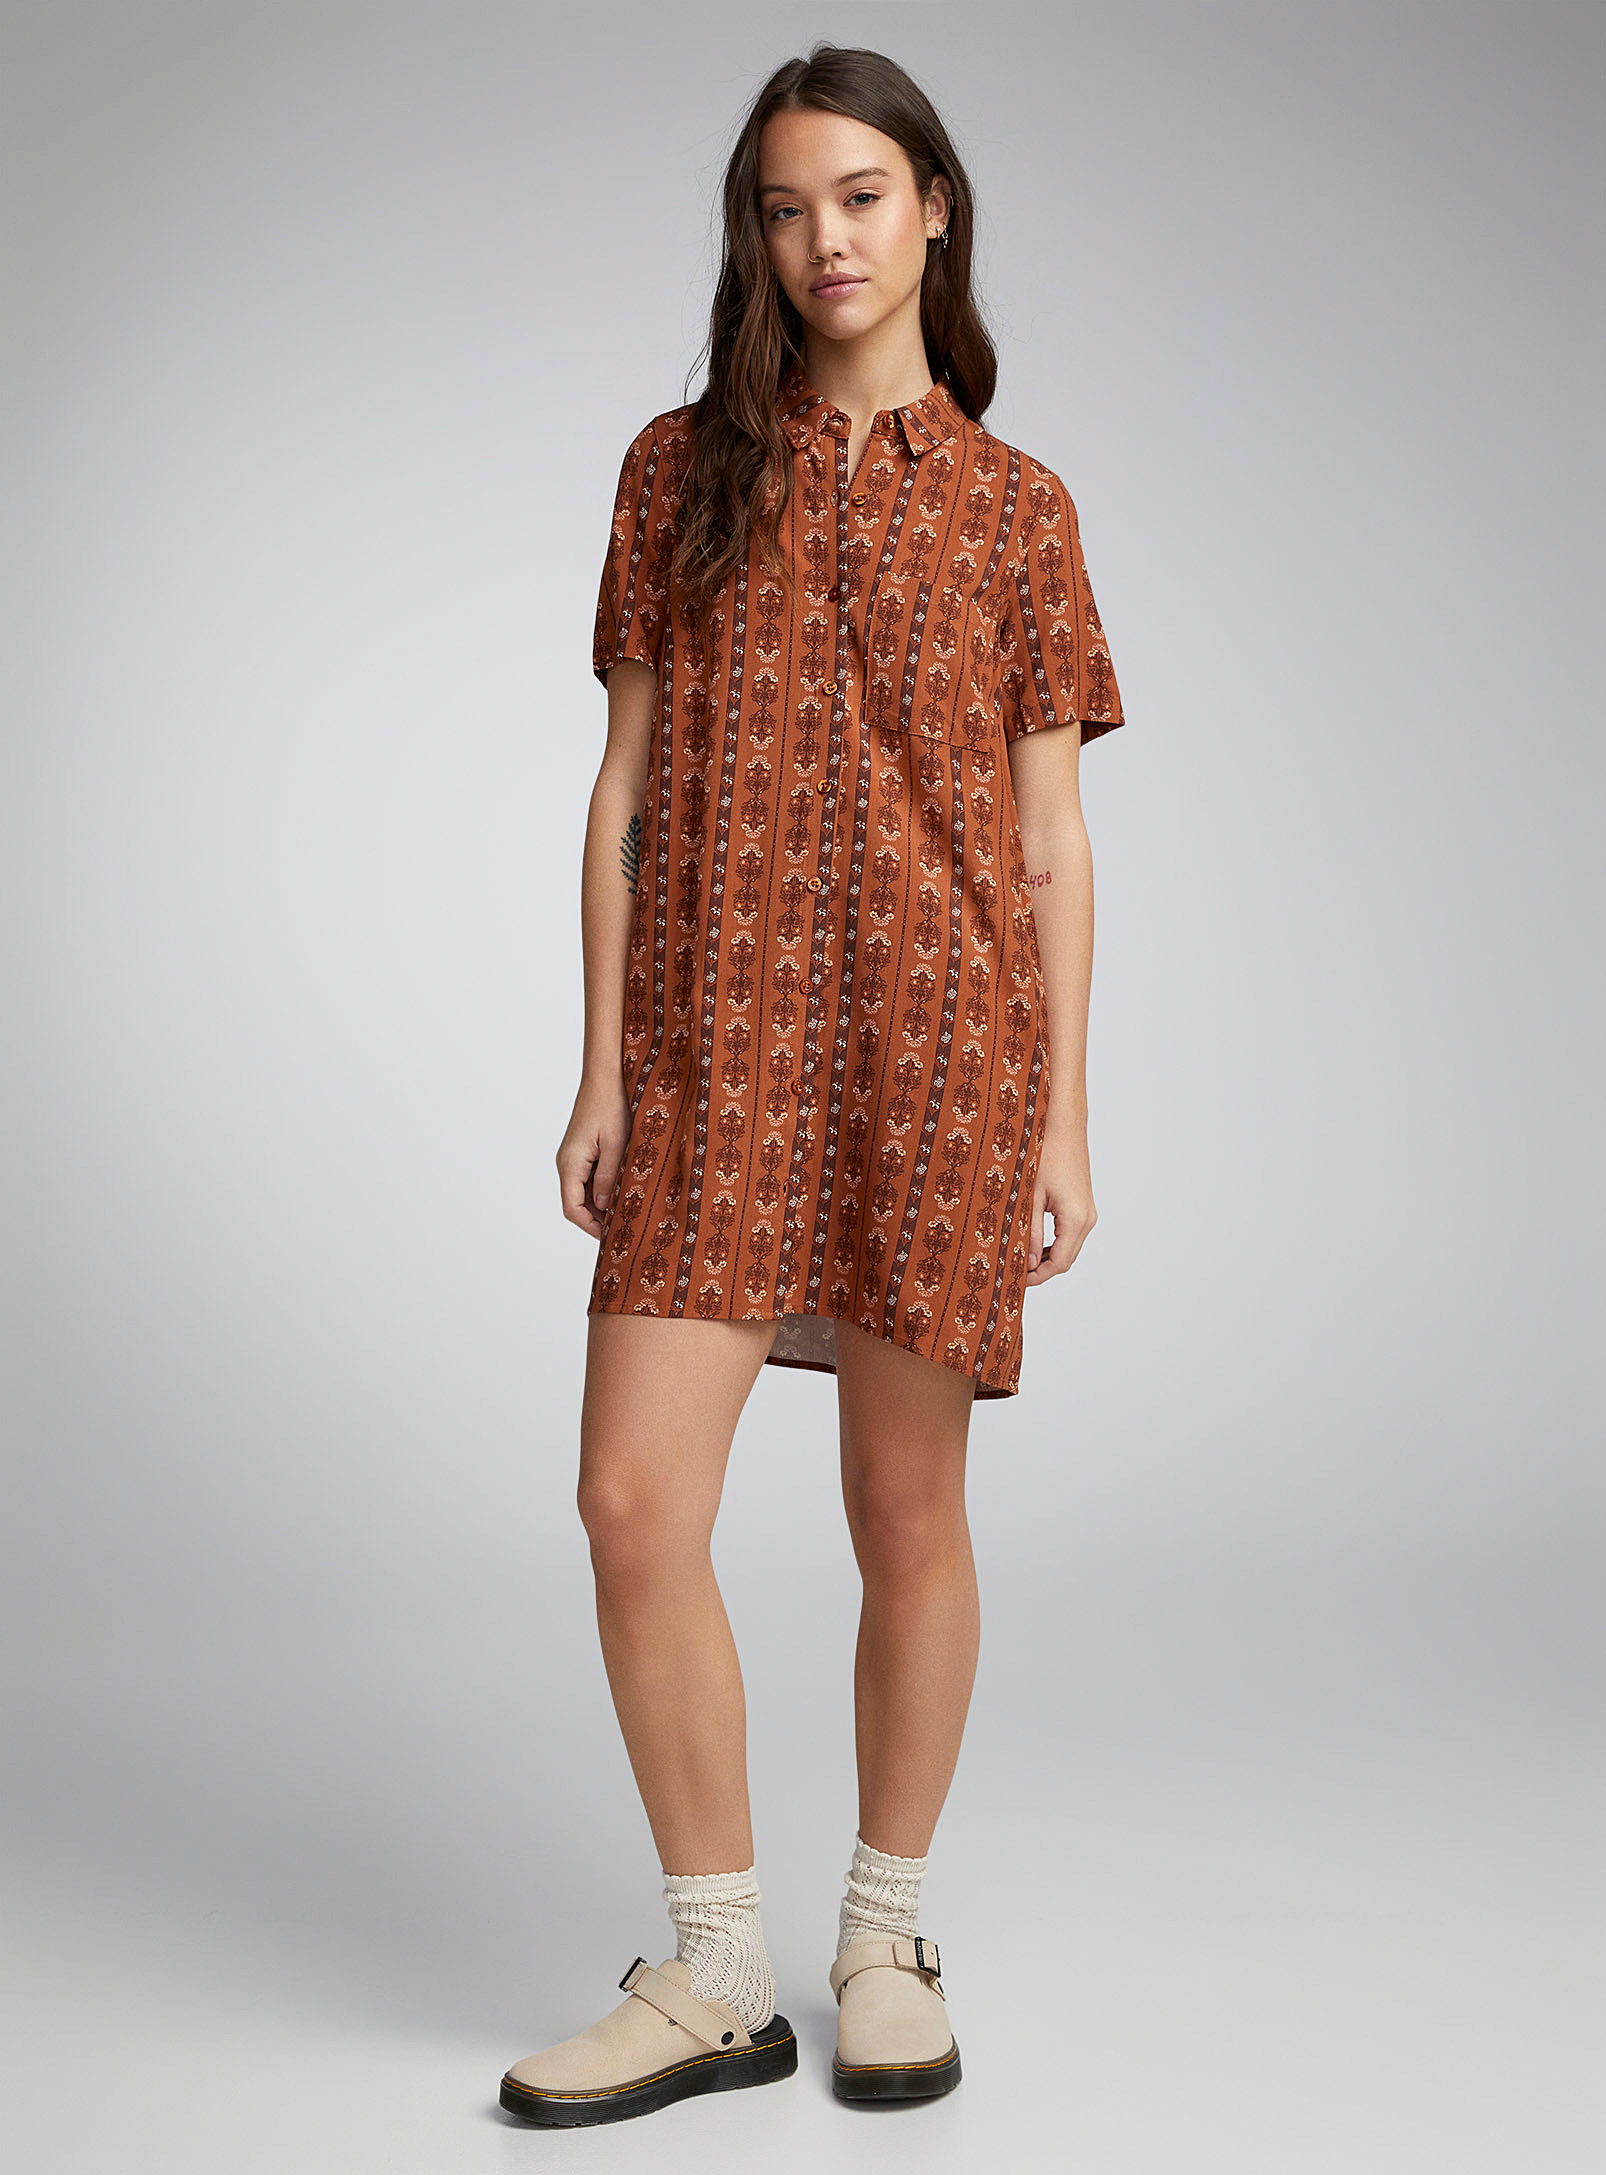 Twik Printed Flowy Shirtdress In Patterned Brown